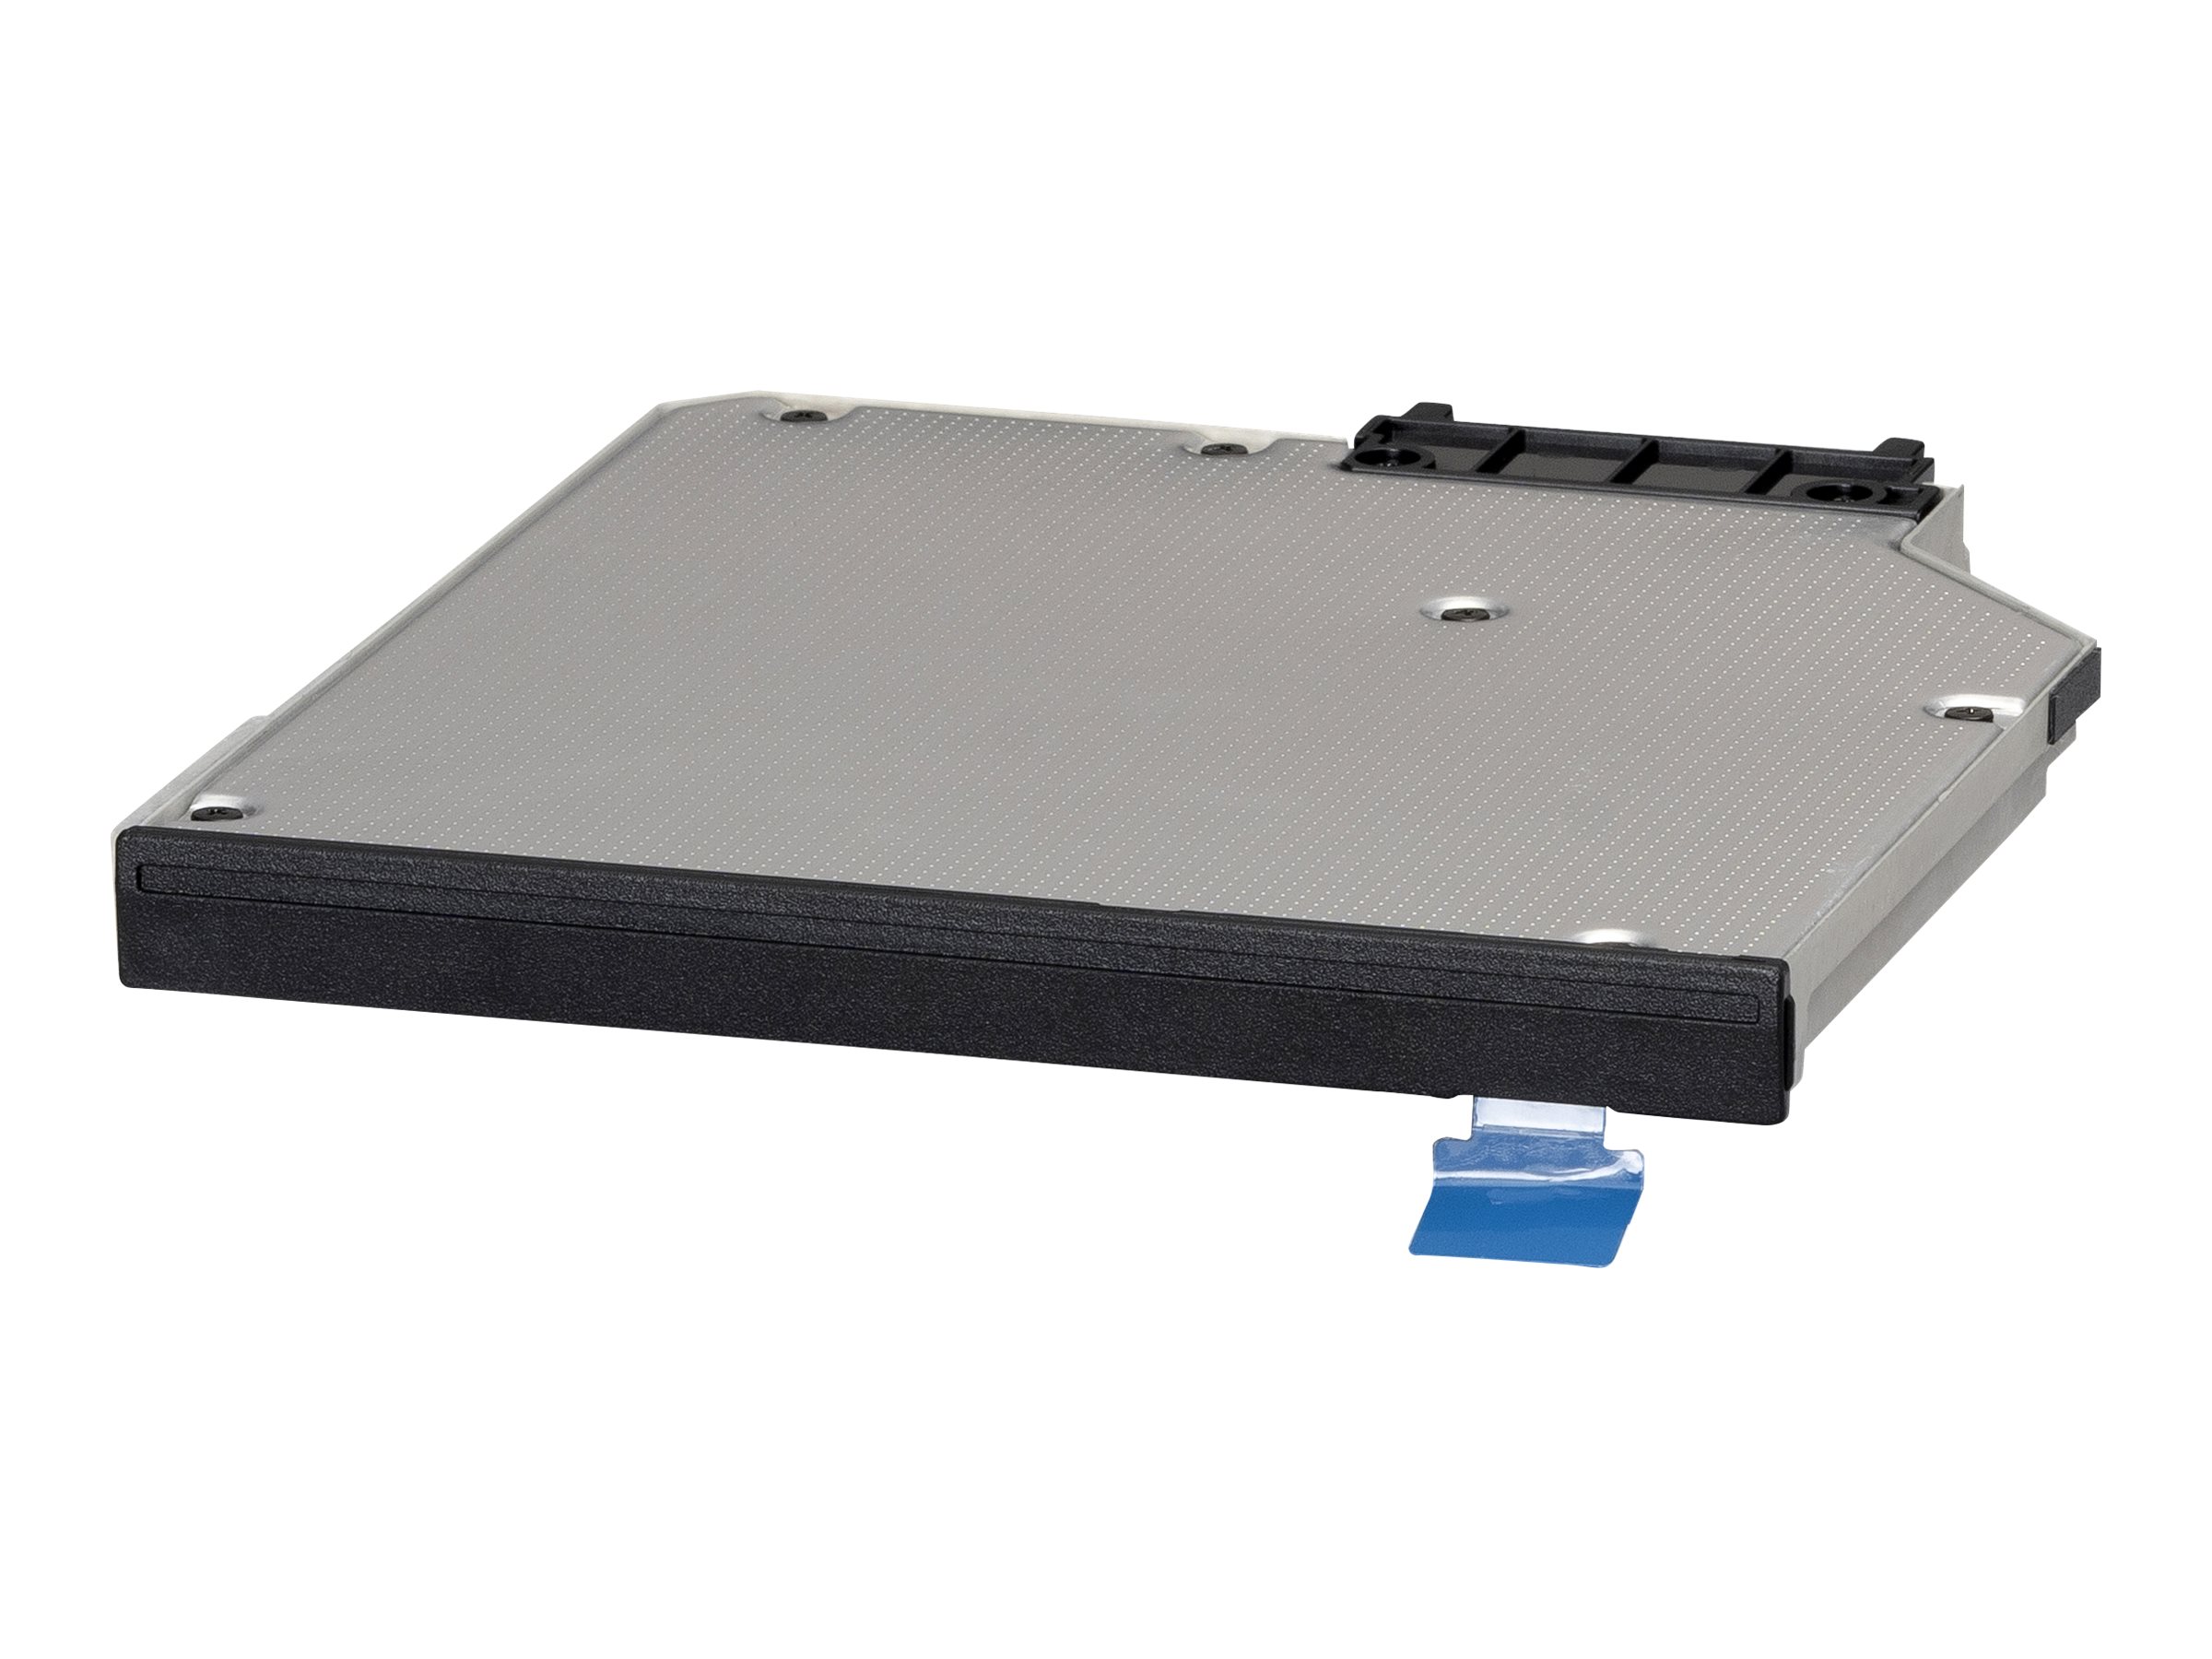 PANASONIC FZ-40 2ND SSD 1TB OPAL (FZ-V2S401T1U)